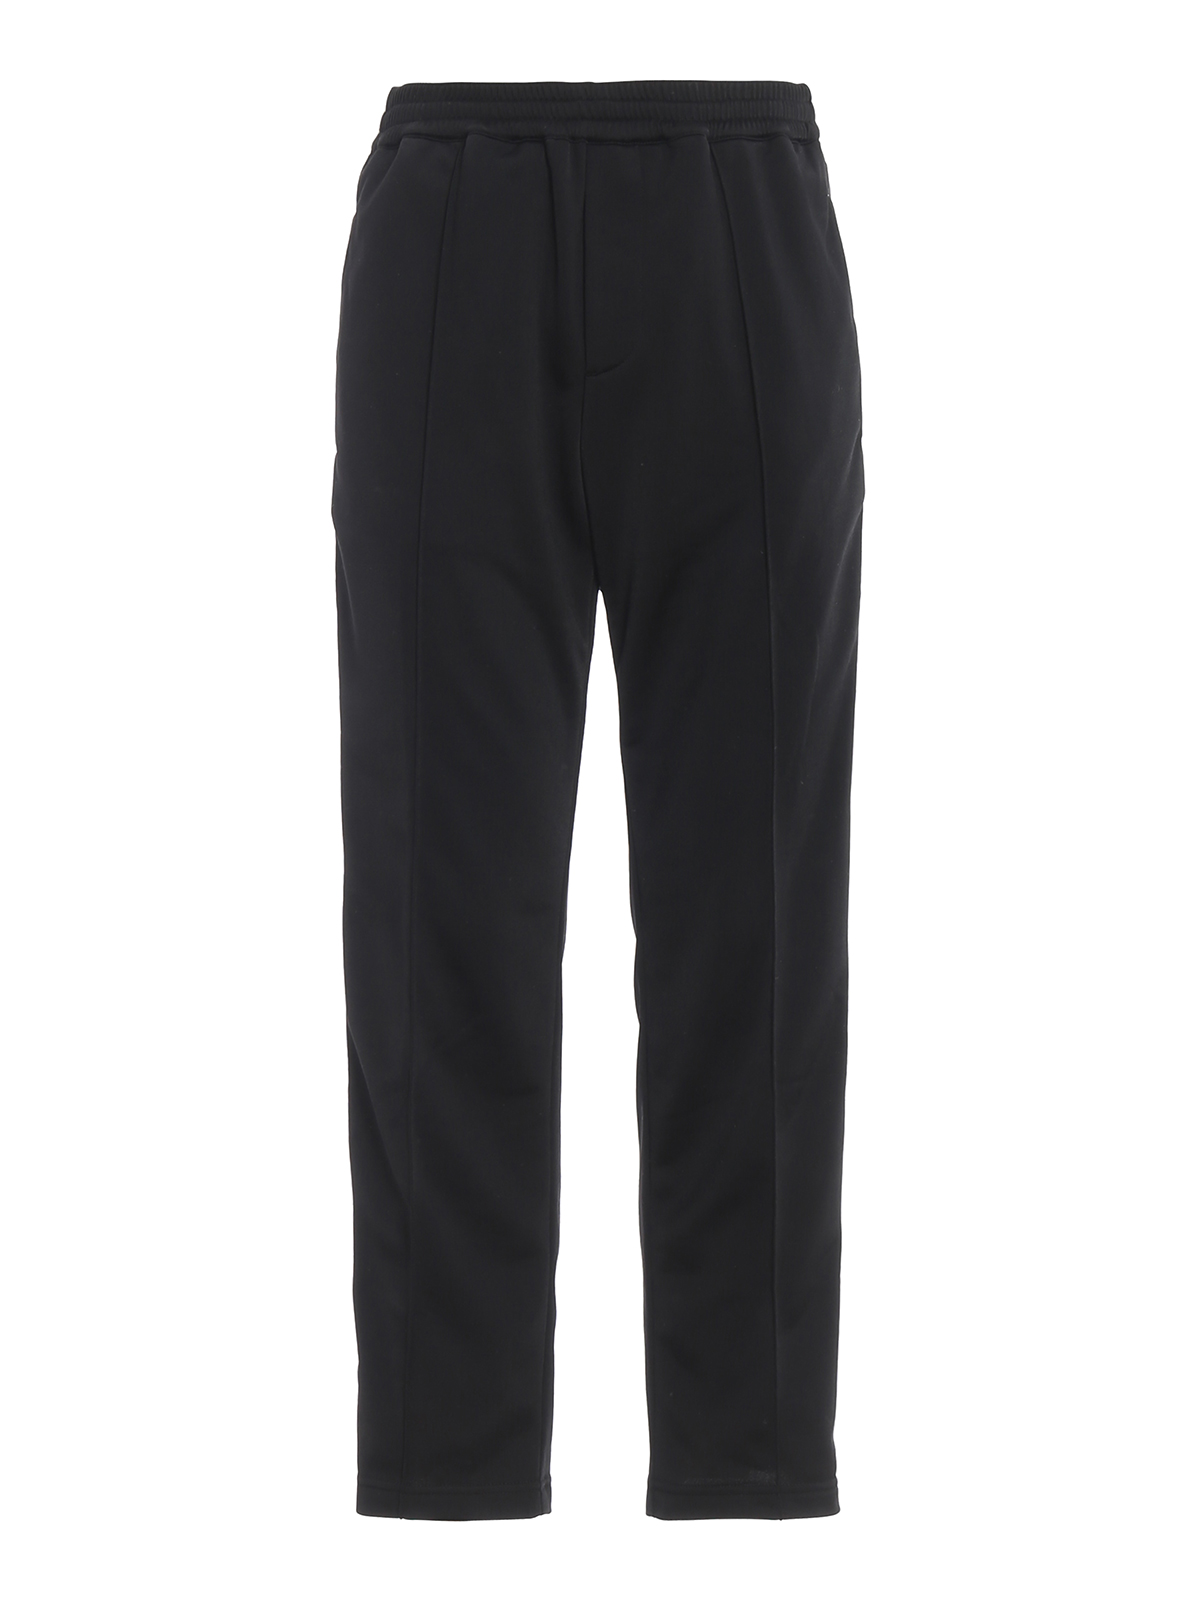 Prada - Glossy black sweat pants 